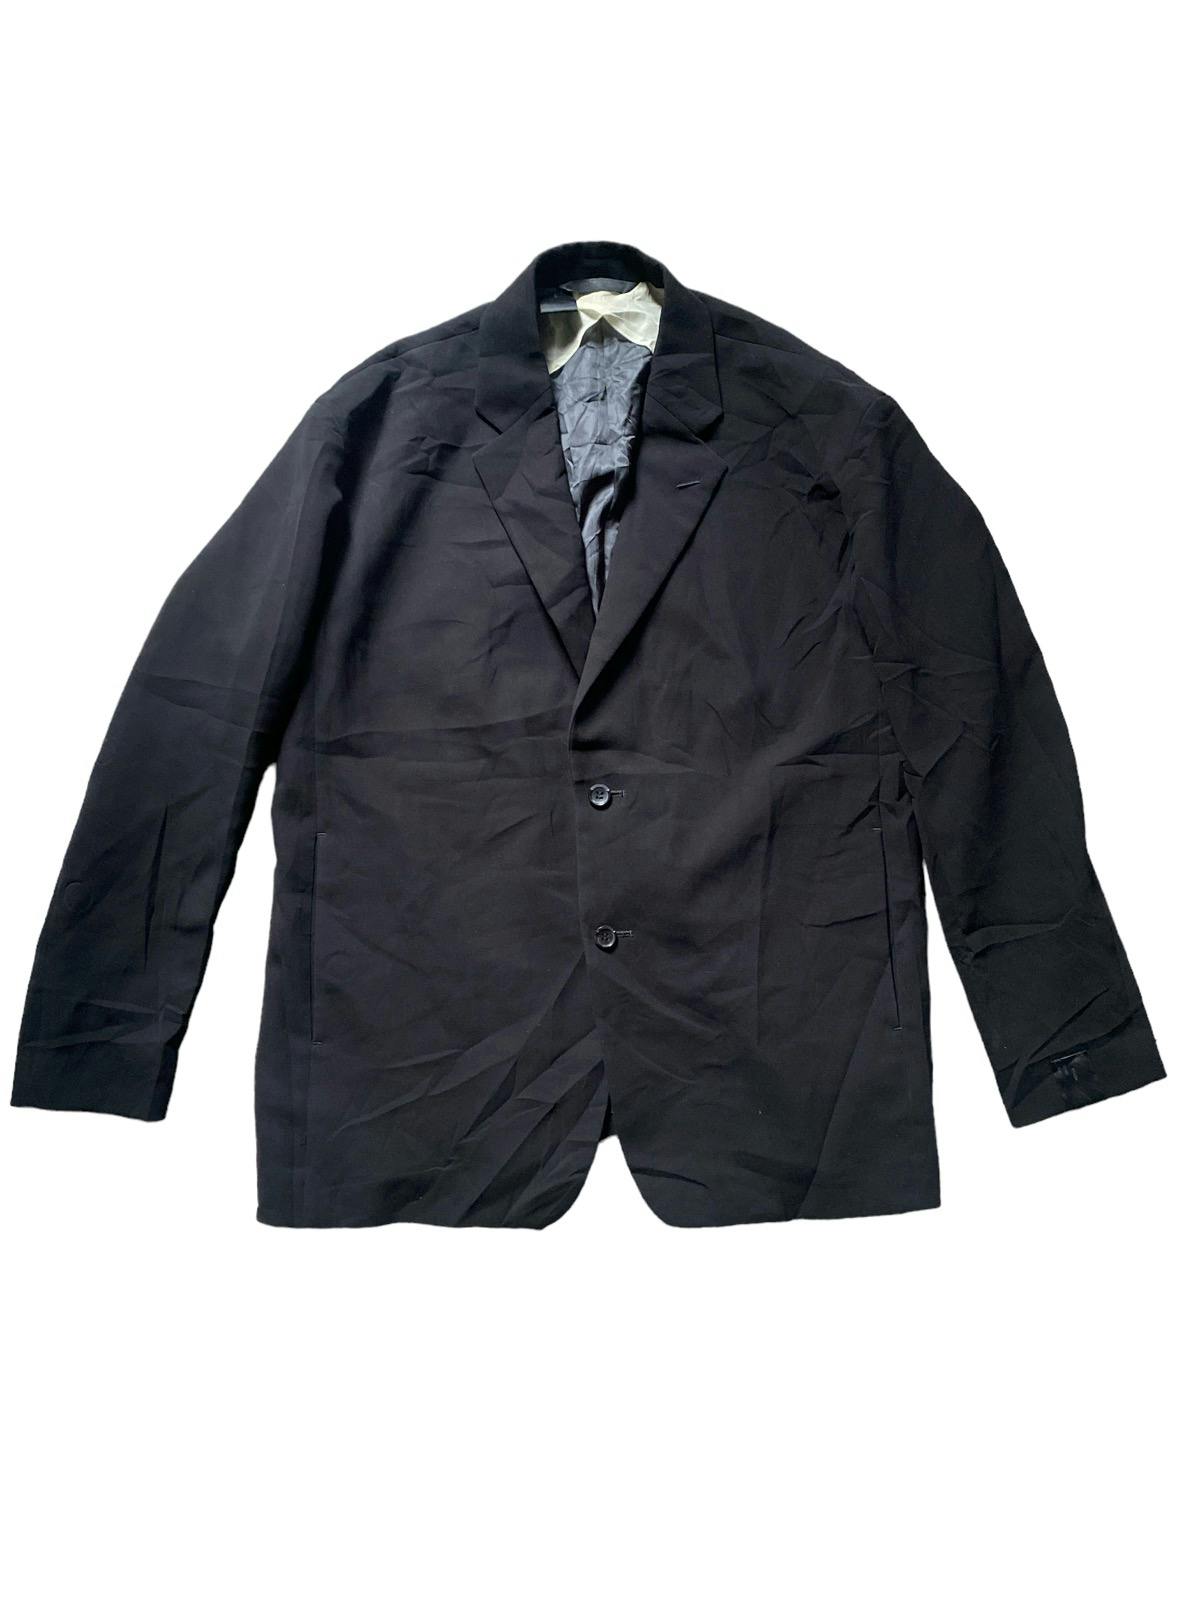 N. Hollywood Pocket Sack Uniforms Dress Suits Jacket Blazer - 1